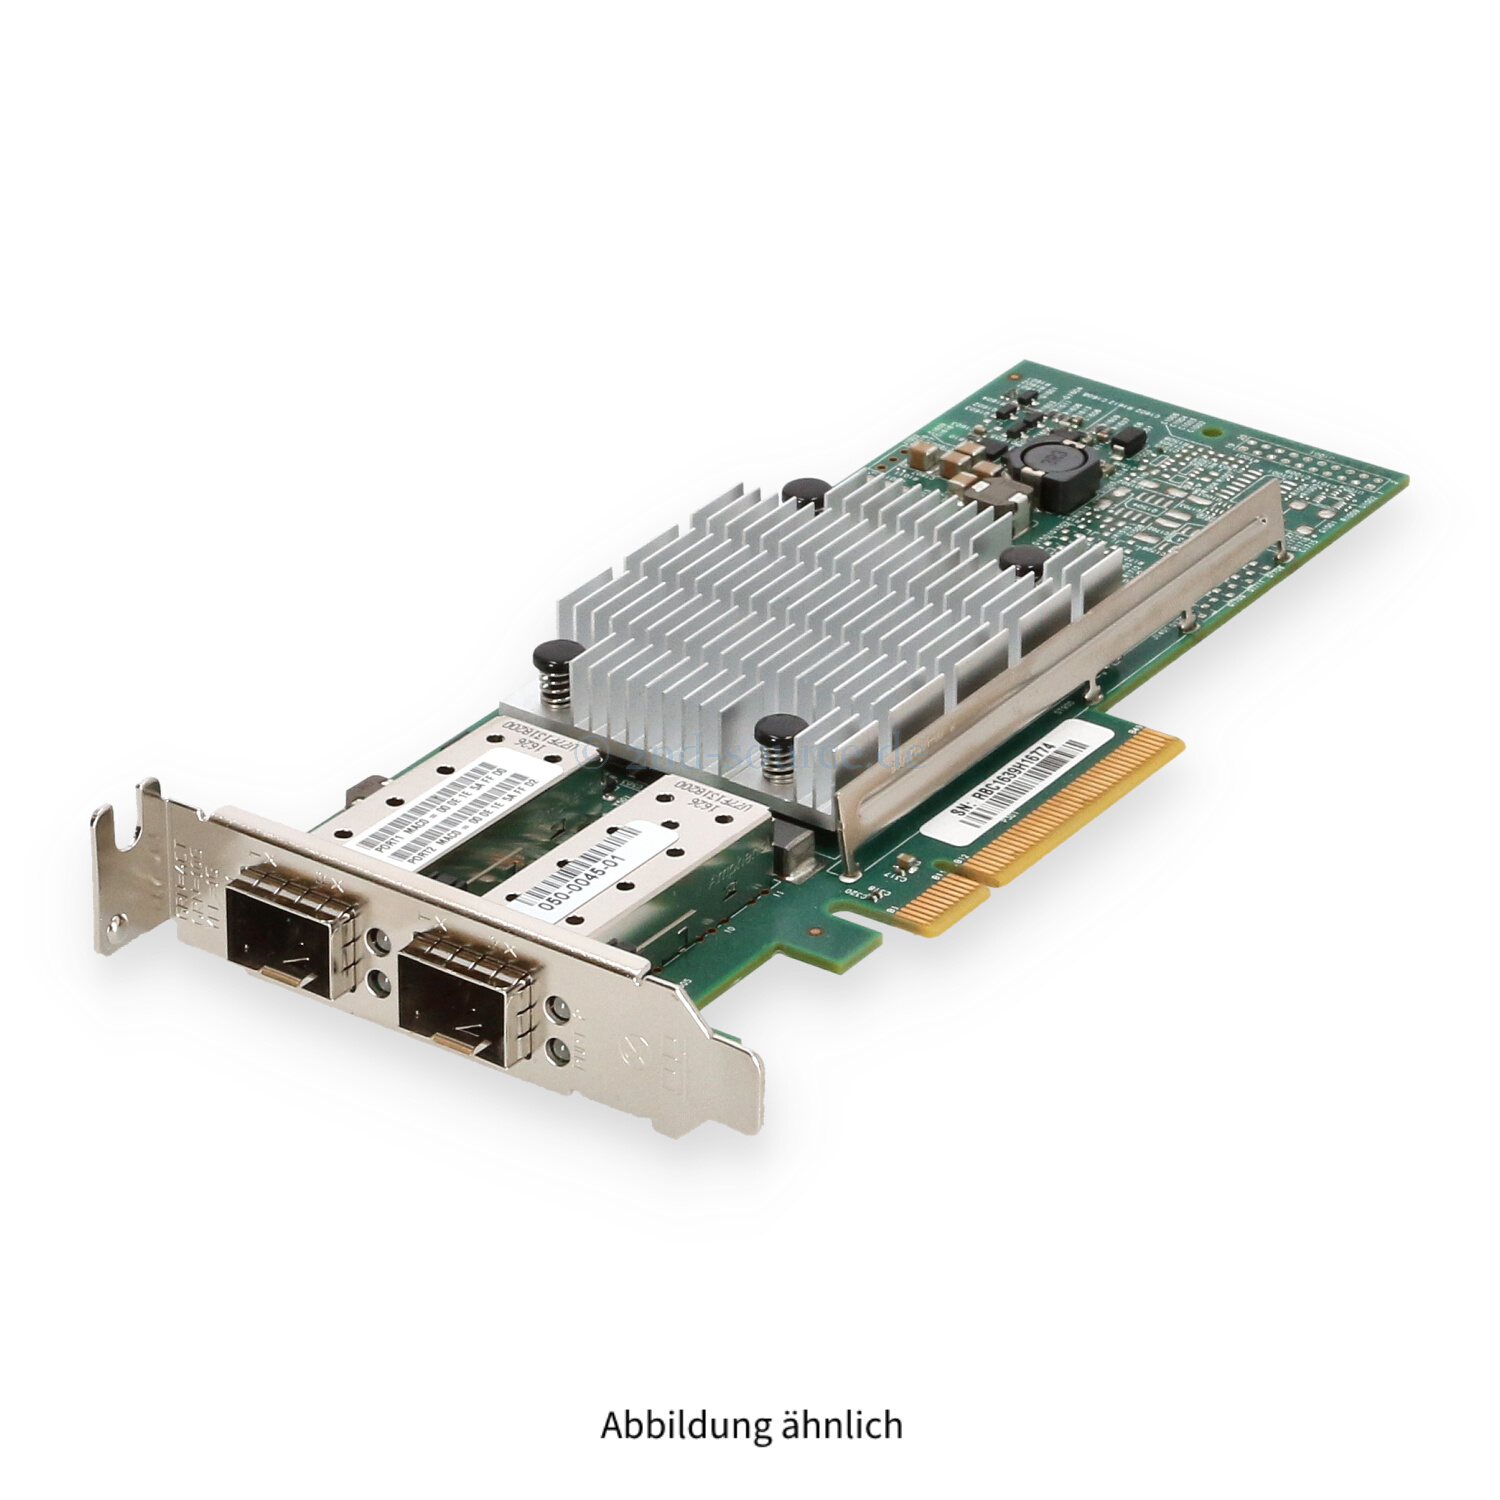 EMC Broadcom 957810A 2x SFP+ 10GbE PCIe x8 Server Ethernet Adapter Low Profile 050-0045-01 BC0210406-01